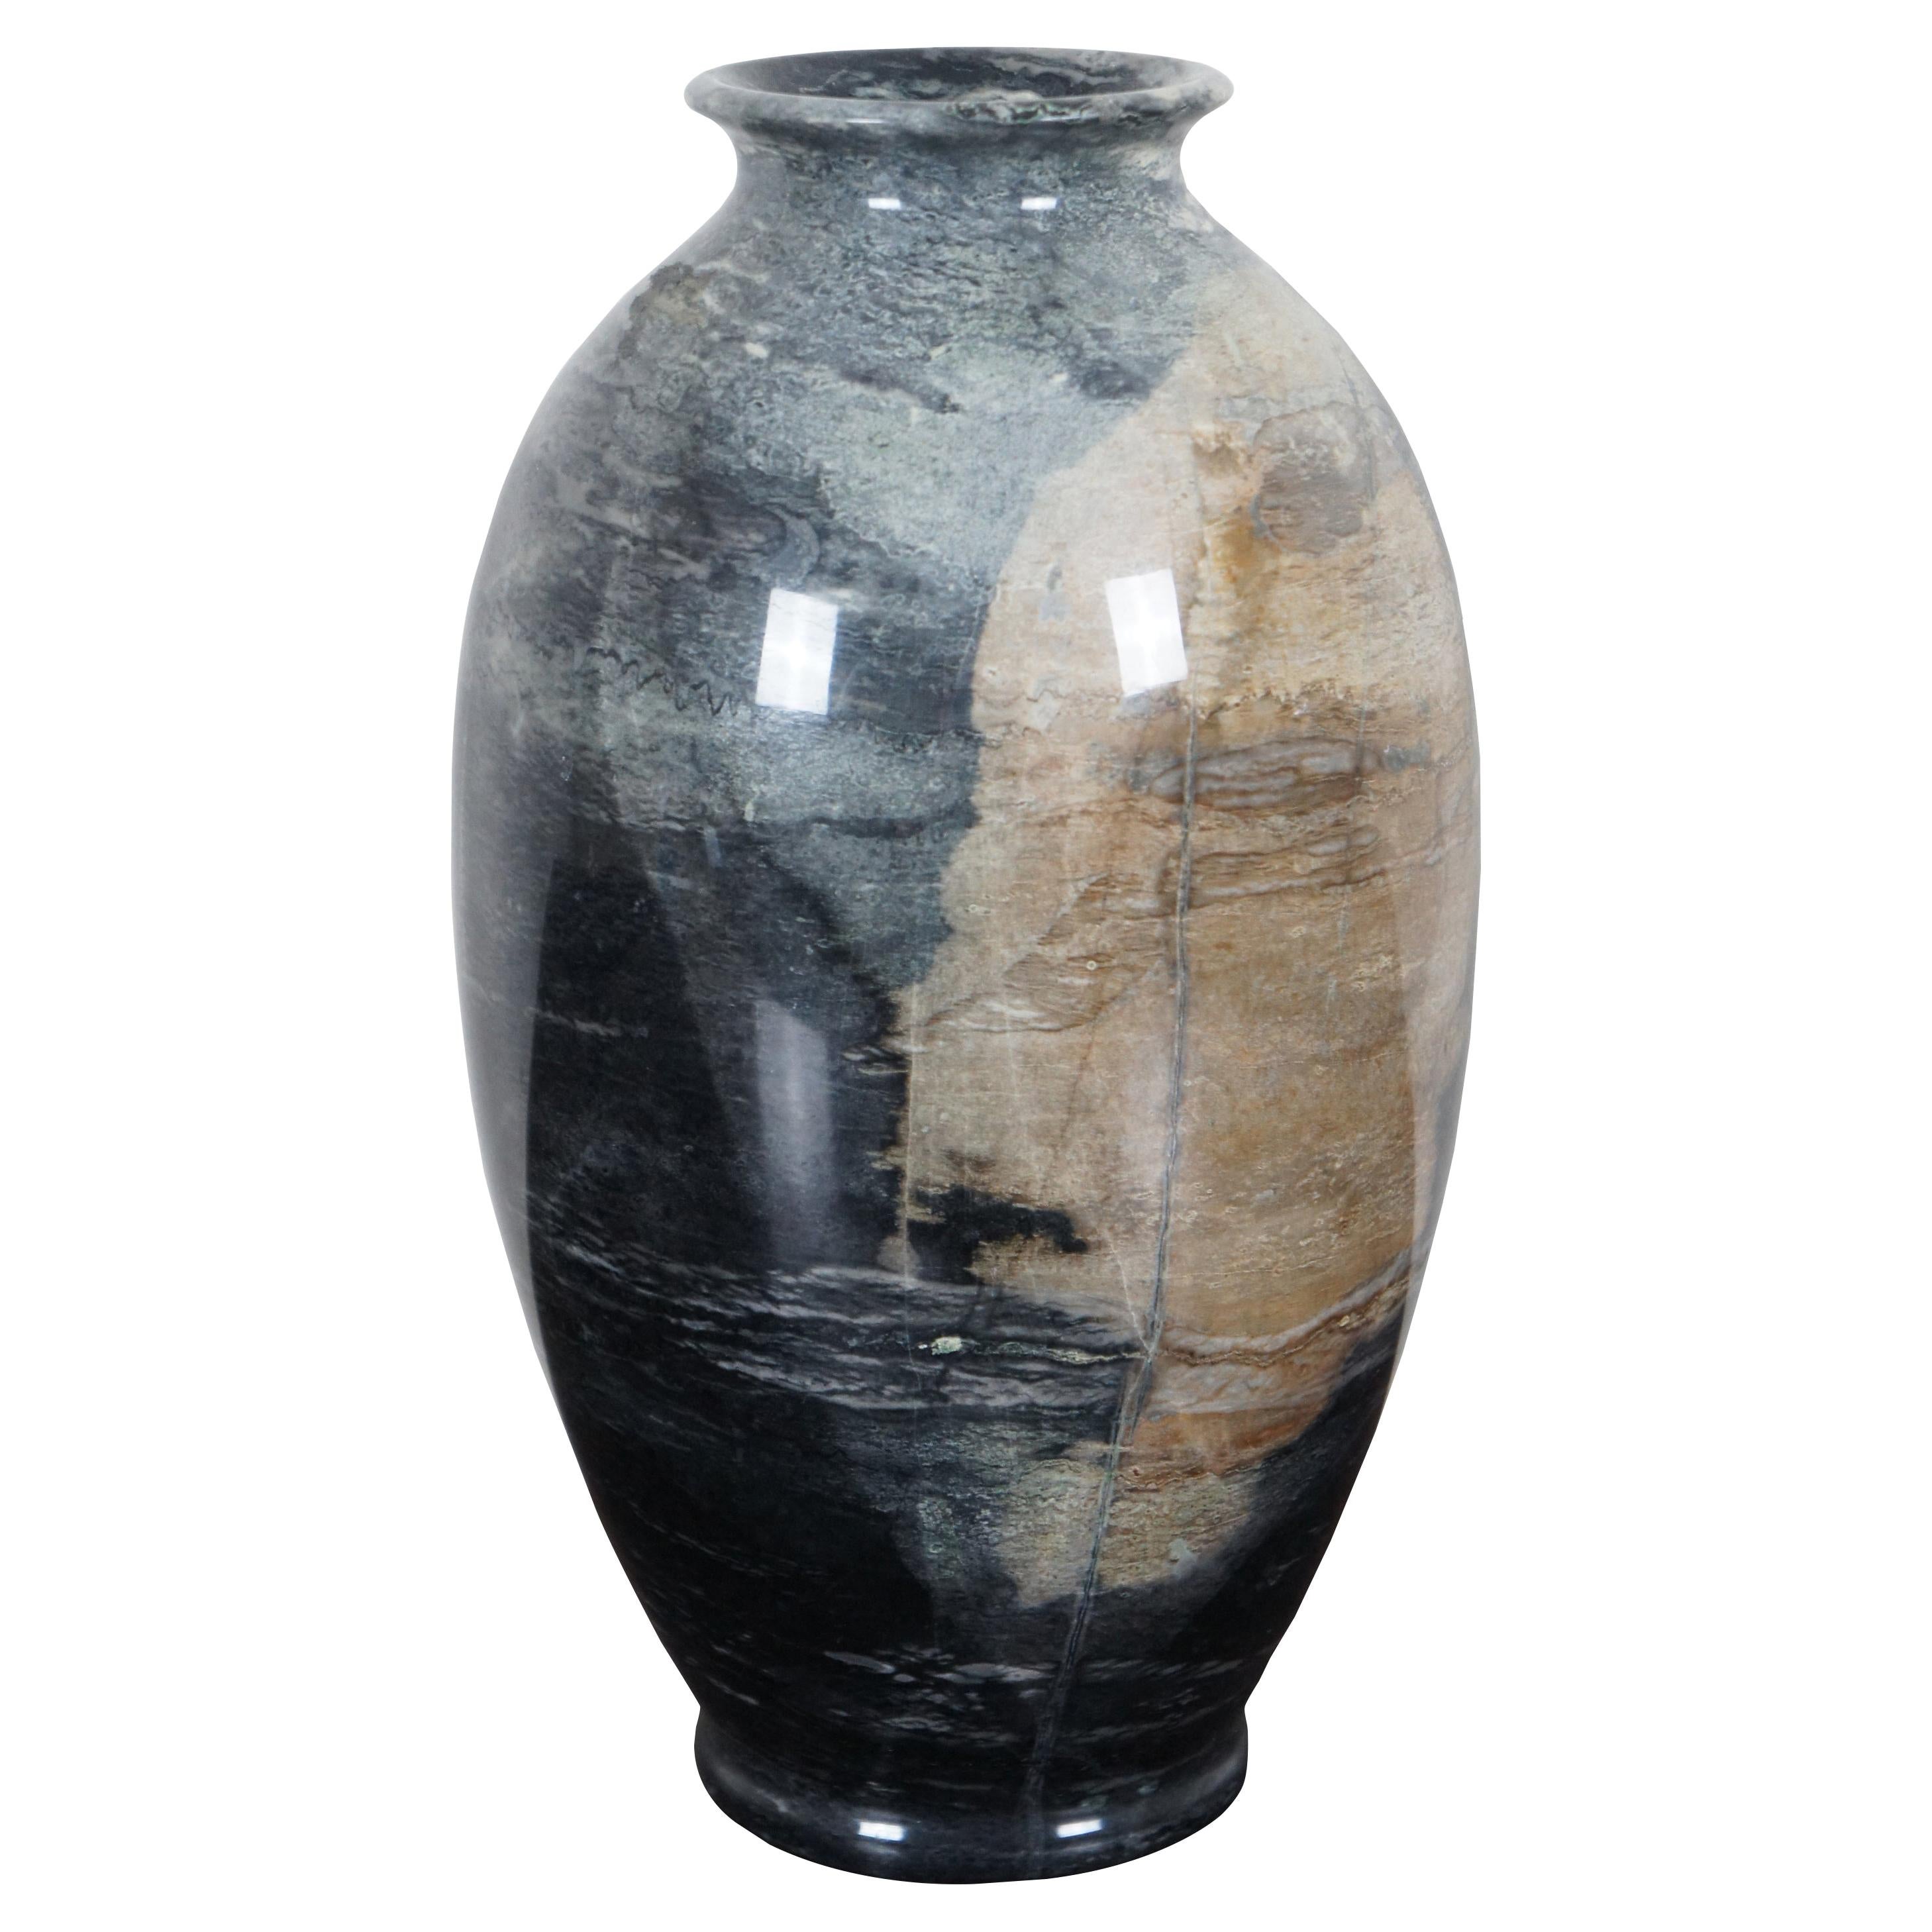 Stone/marble flower vase or urn